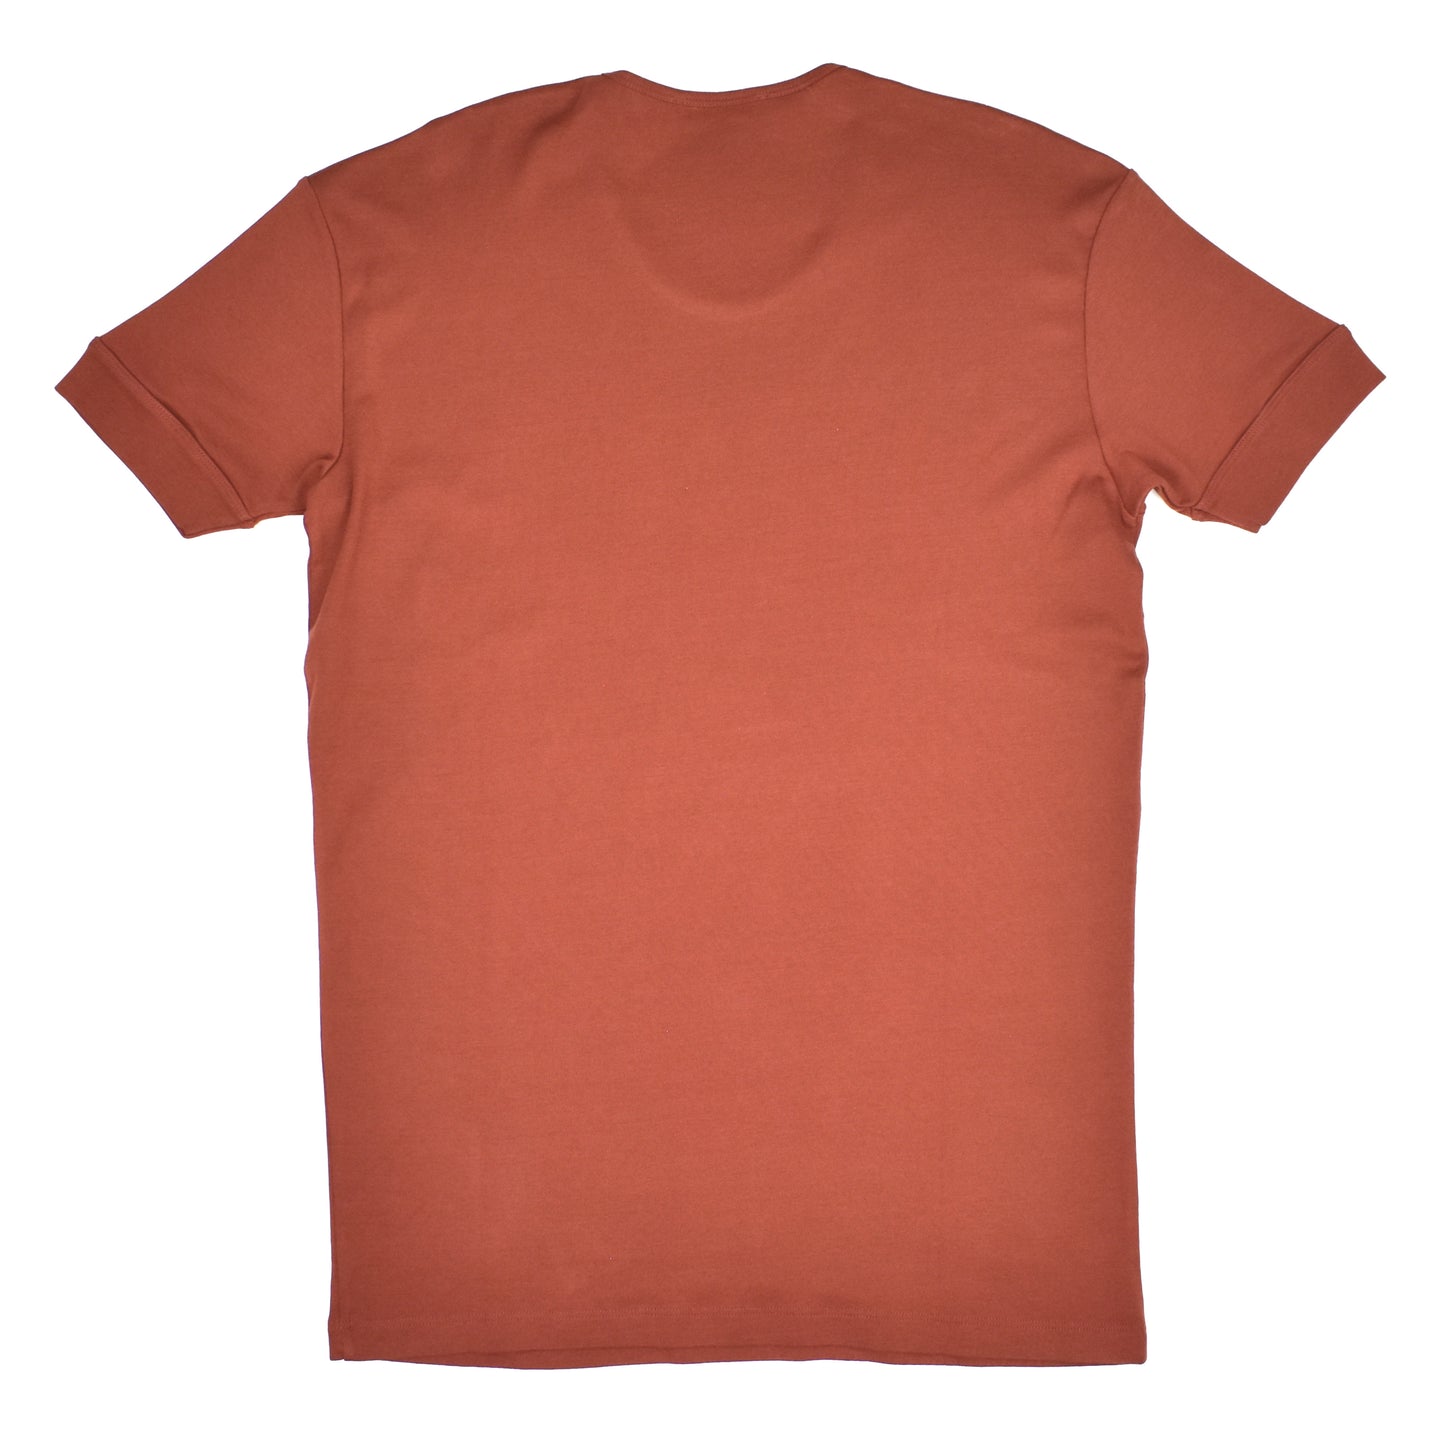 Lemaire - Brick Red Cotton T-Shirt